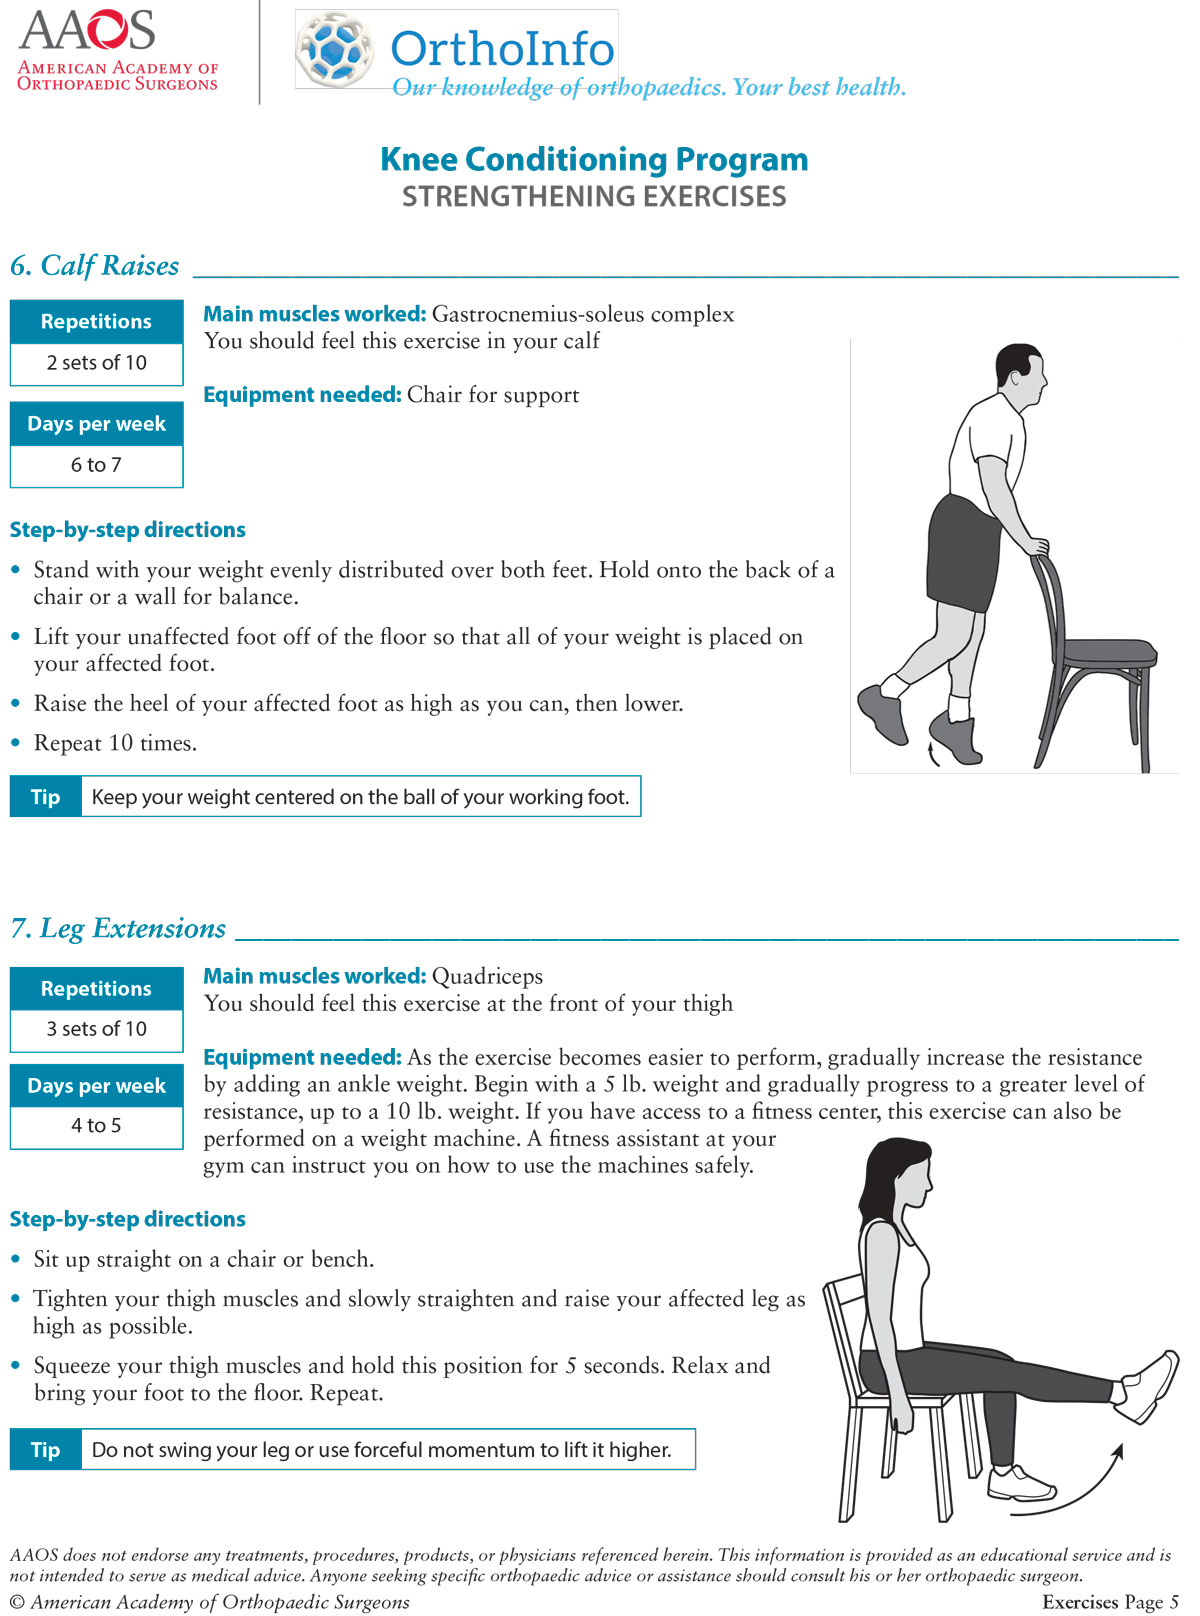 Knee Conditioning Program